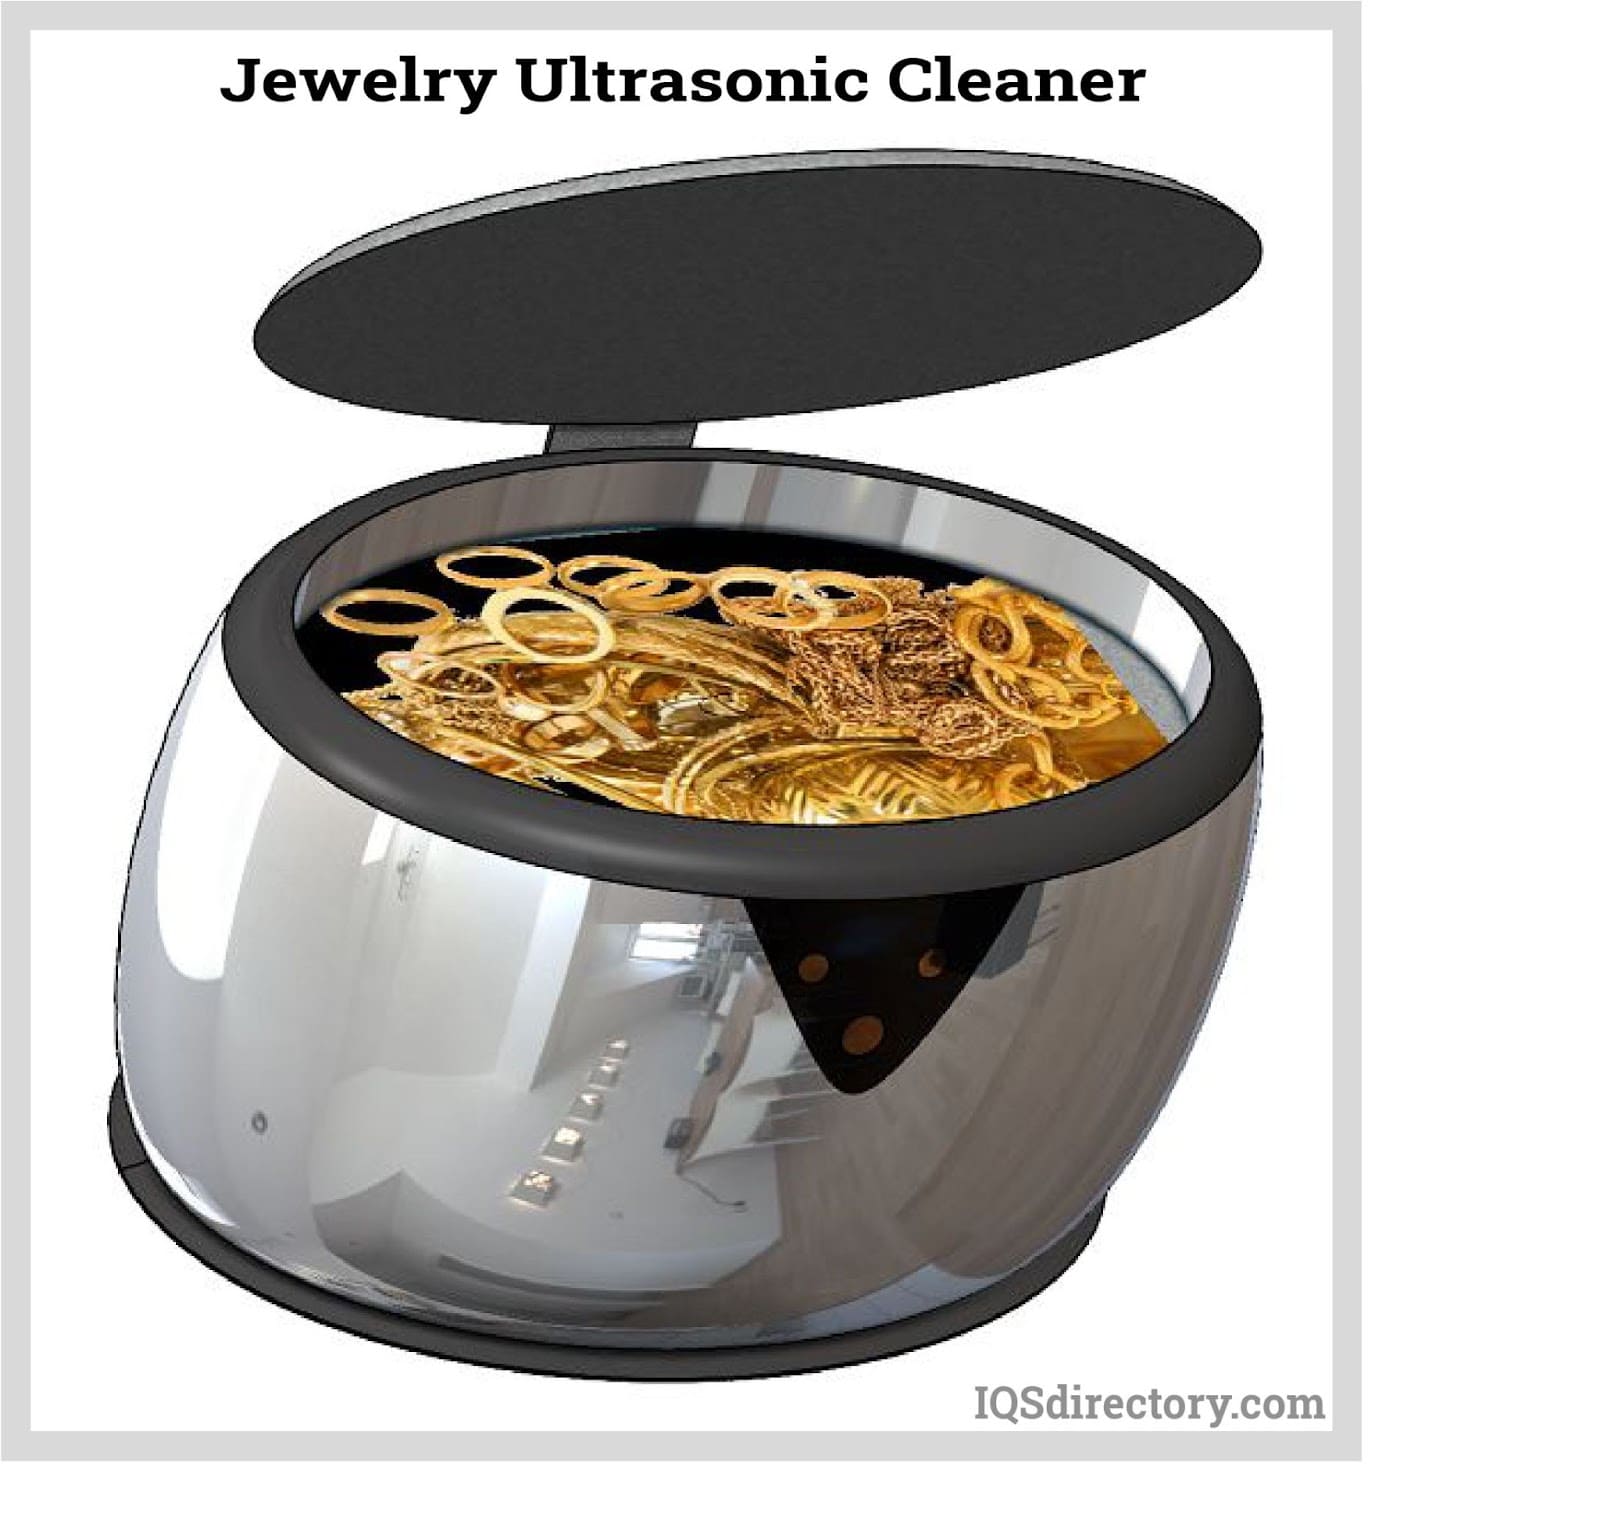 Jewelry Ultrasonic Cleaner